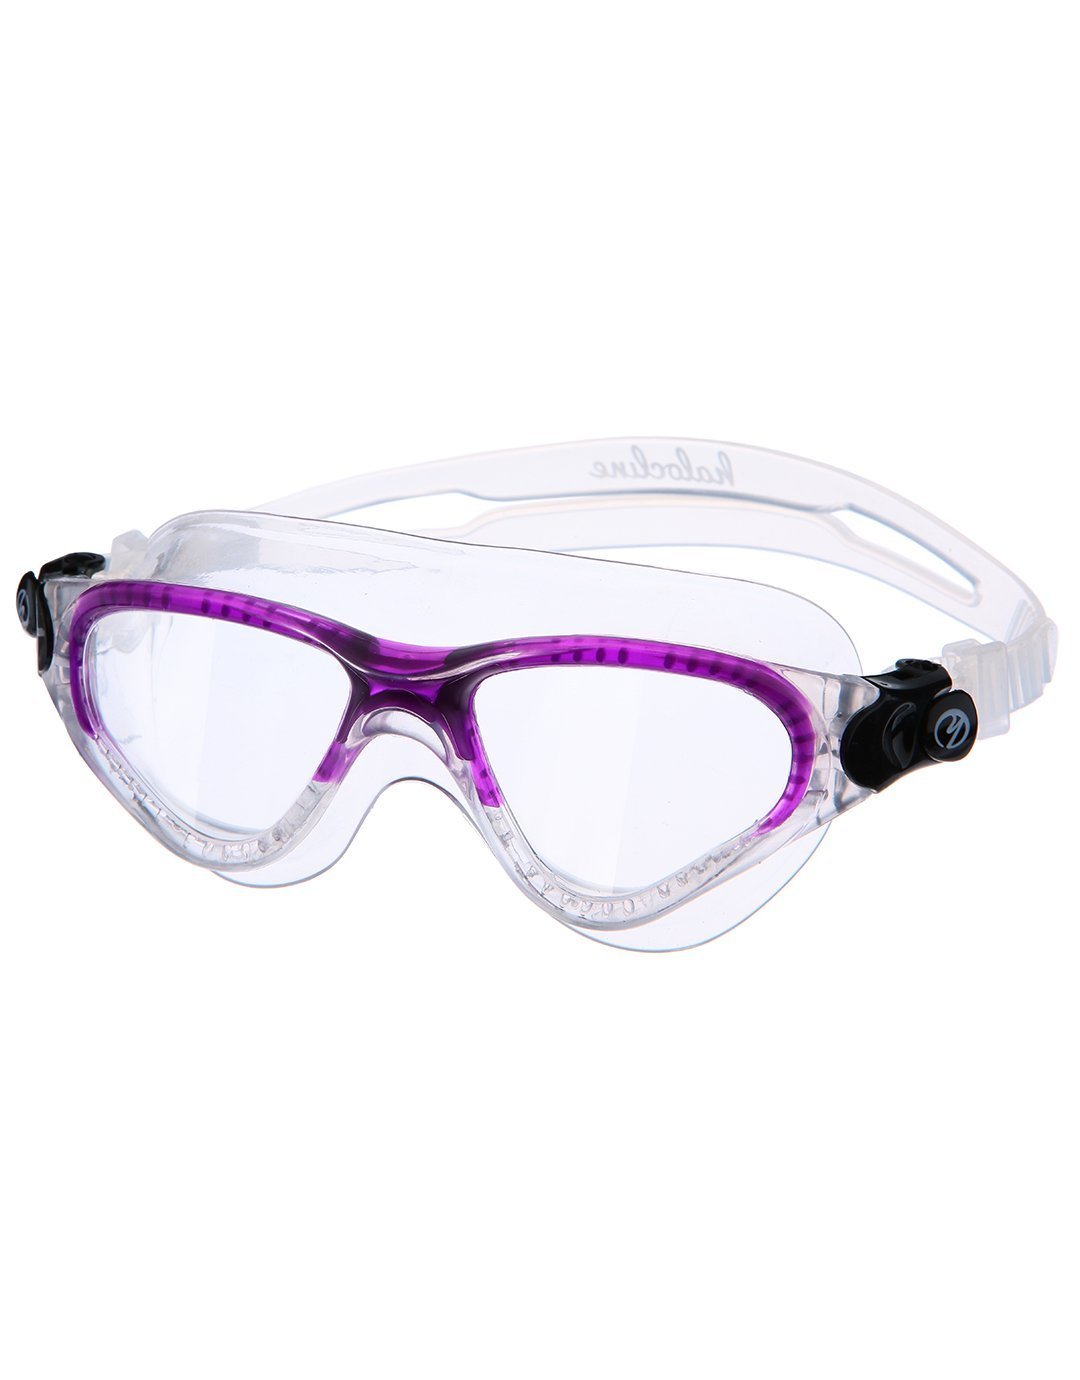 Halocline Vision Plus Swimming Goggles